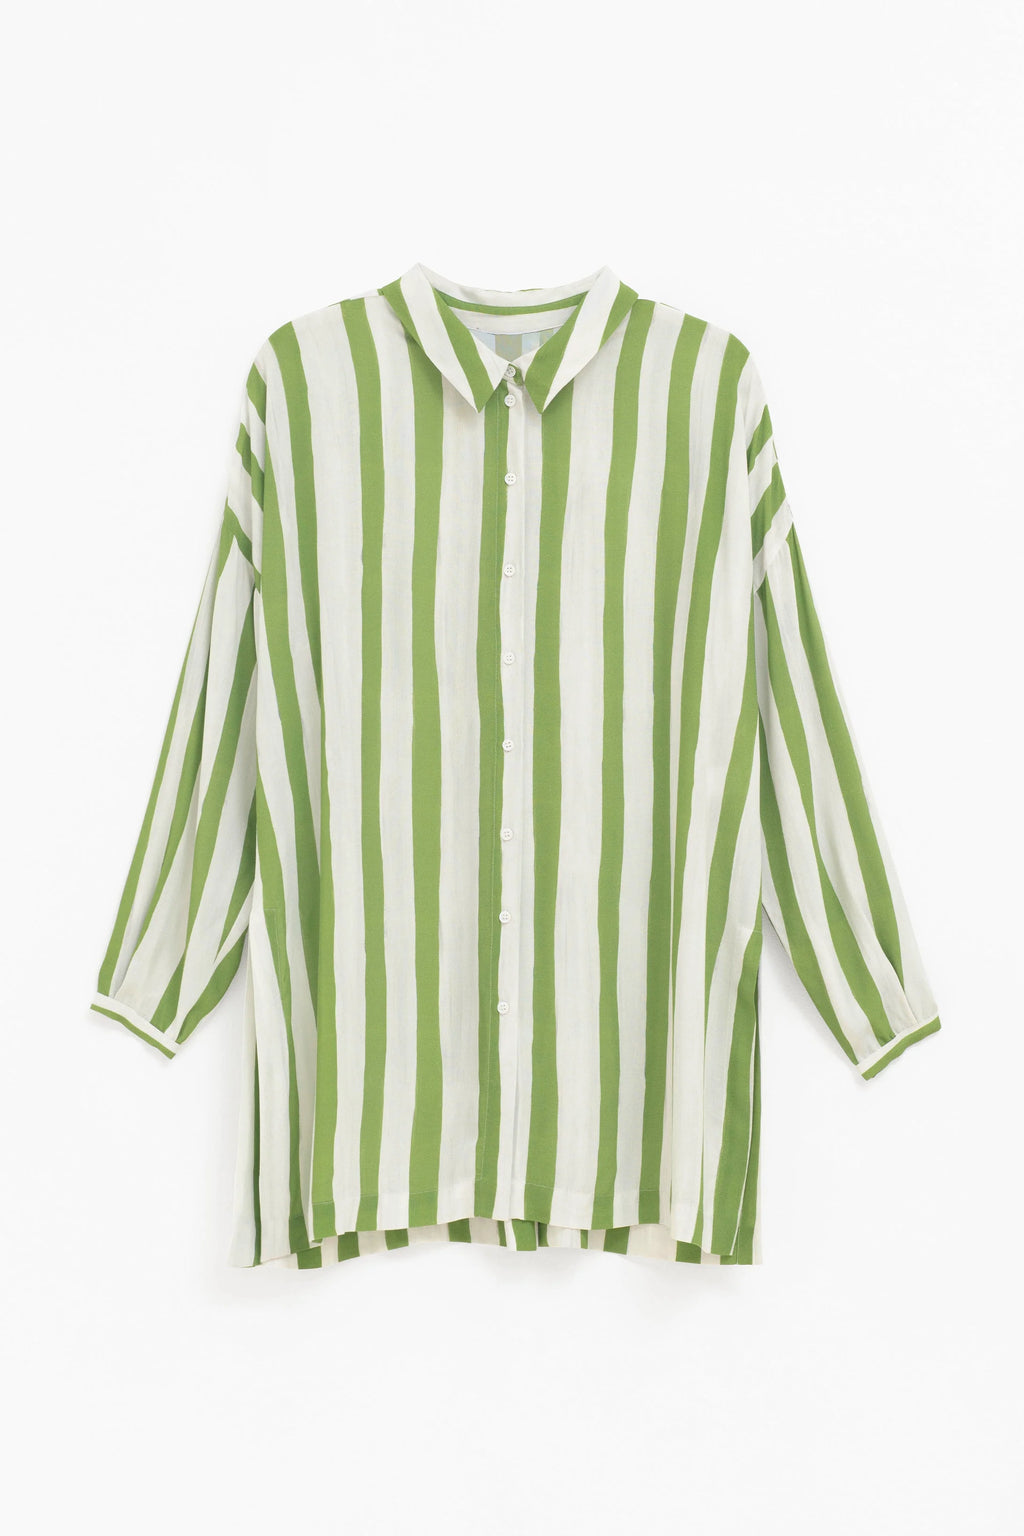 ELK | Tilbe Shirt Green and White Paint